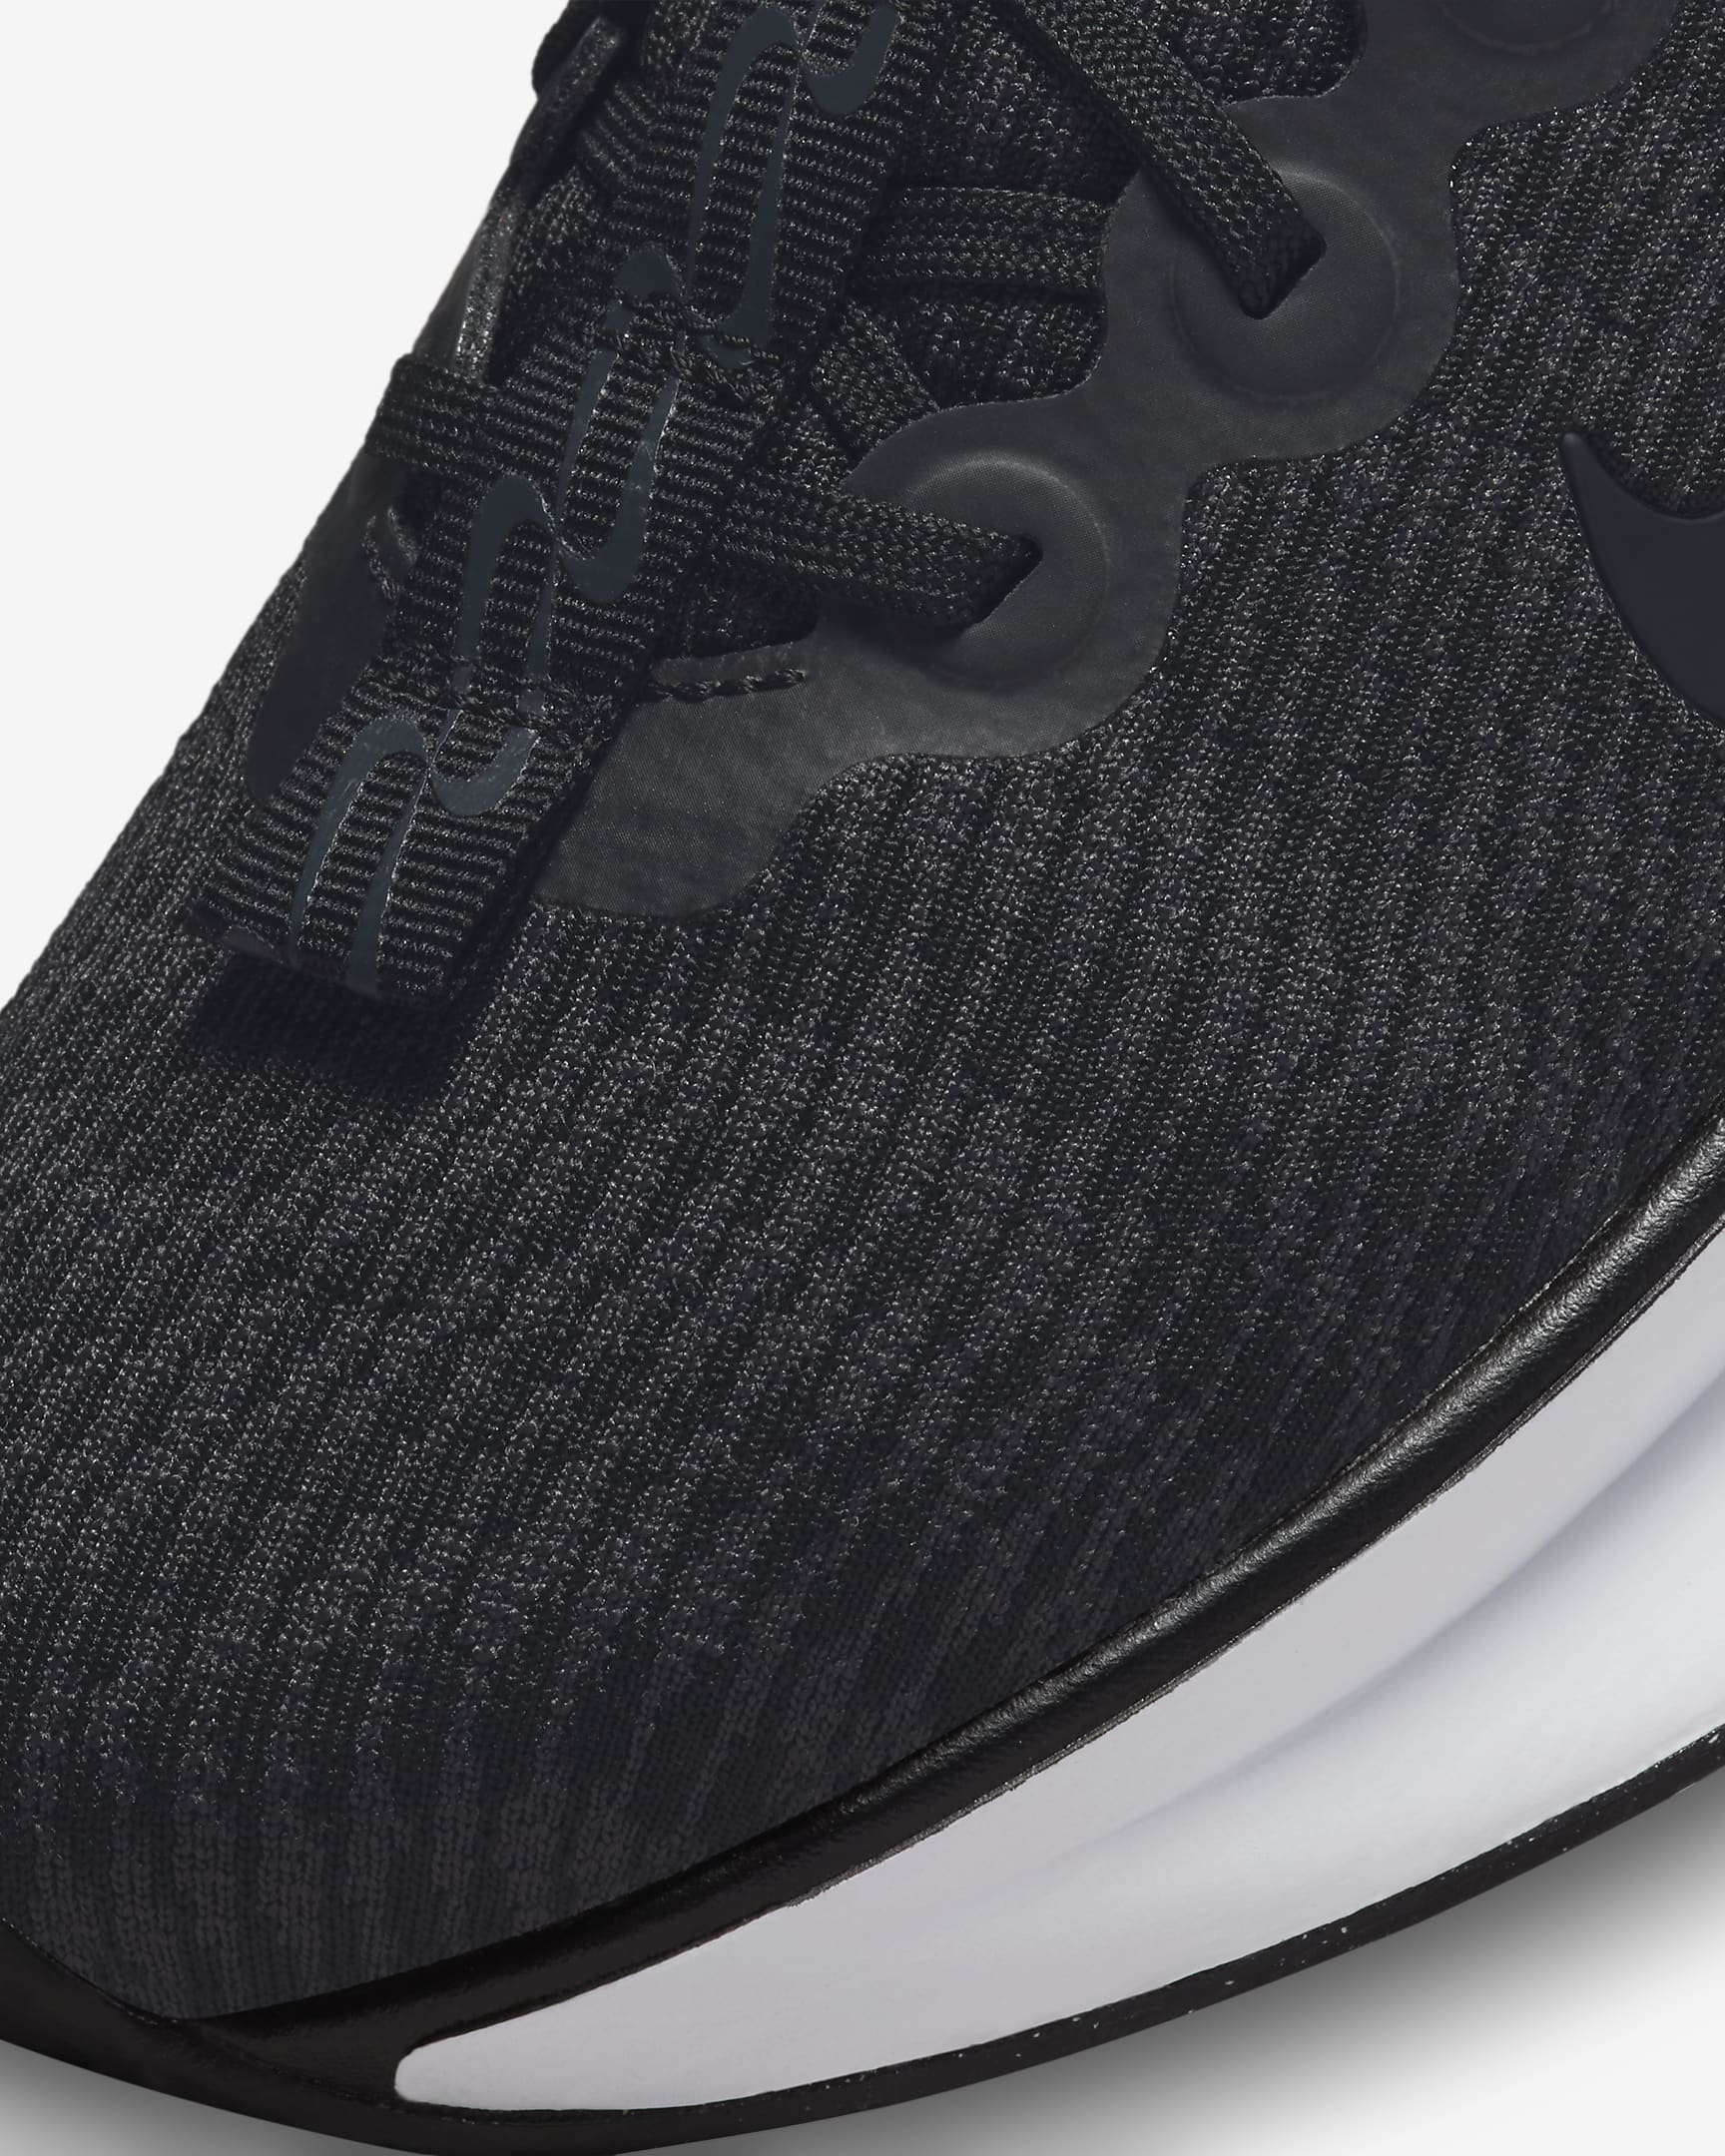 Nike Motiva Women's Walking Shoes - Black/Anthracite/White/Black